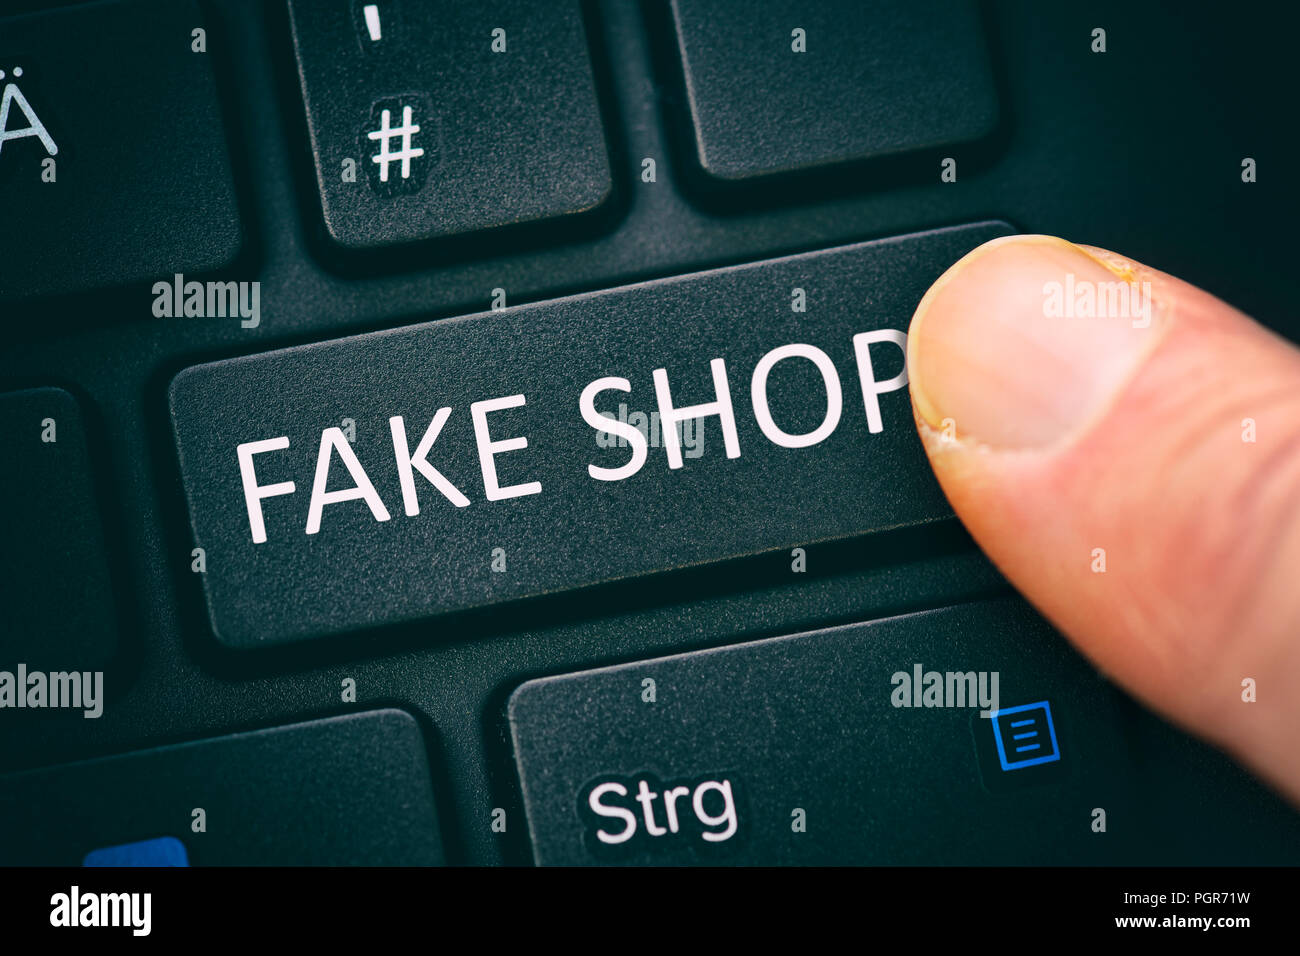 Fake shop computer key Banque D'Images